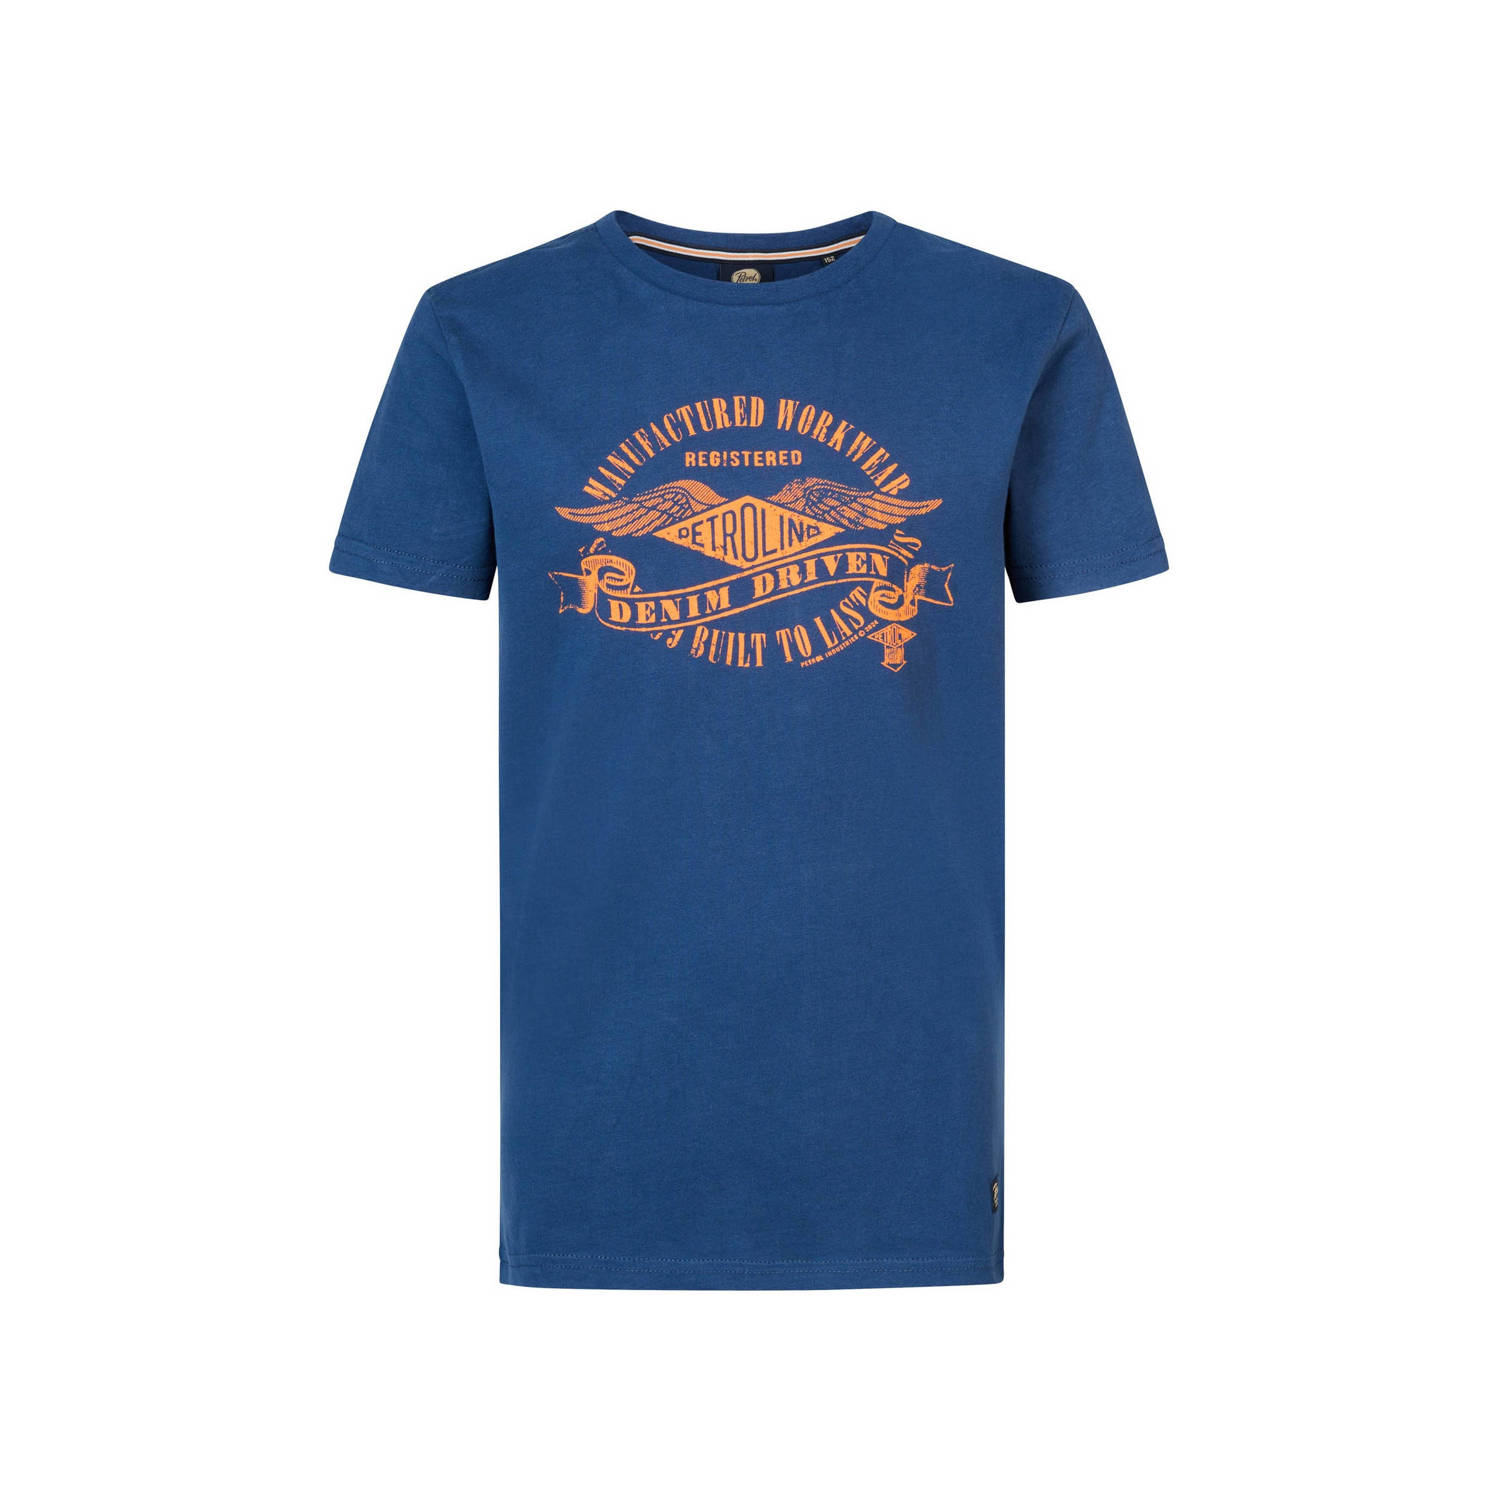 Petrol Industries T-shirt met logo blauw